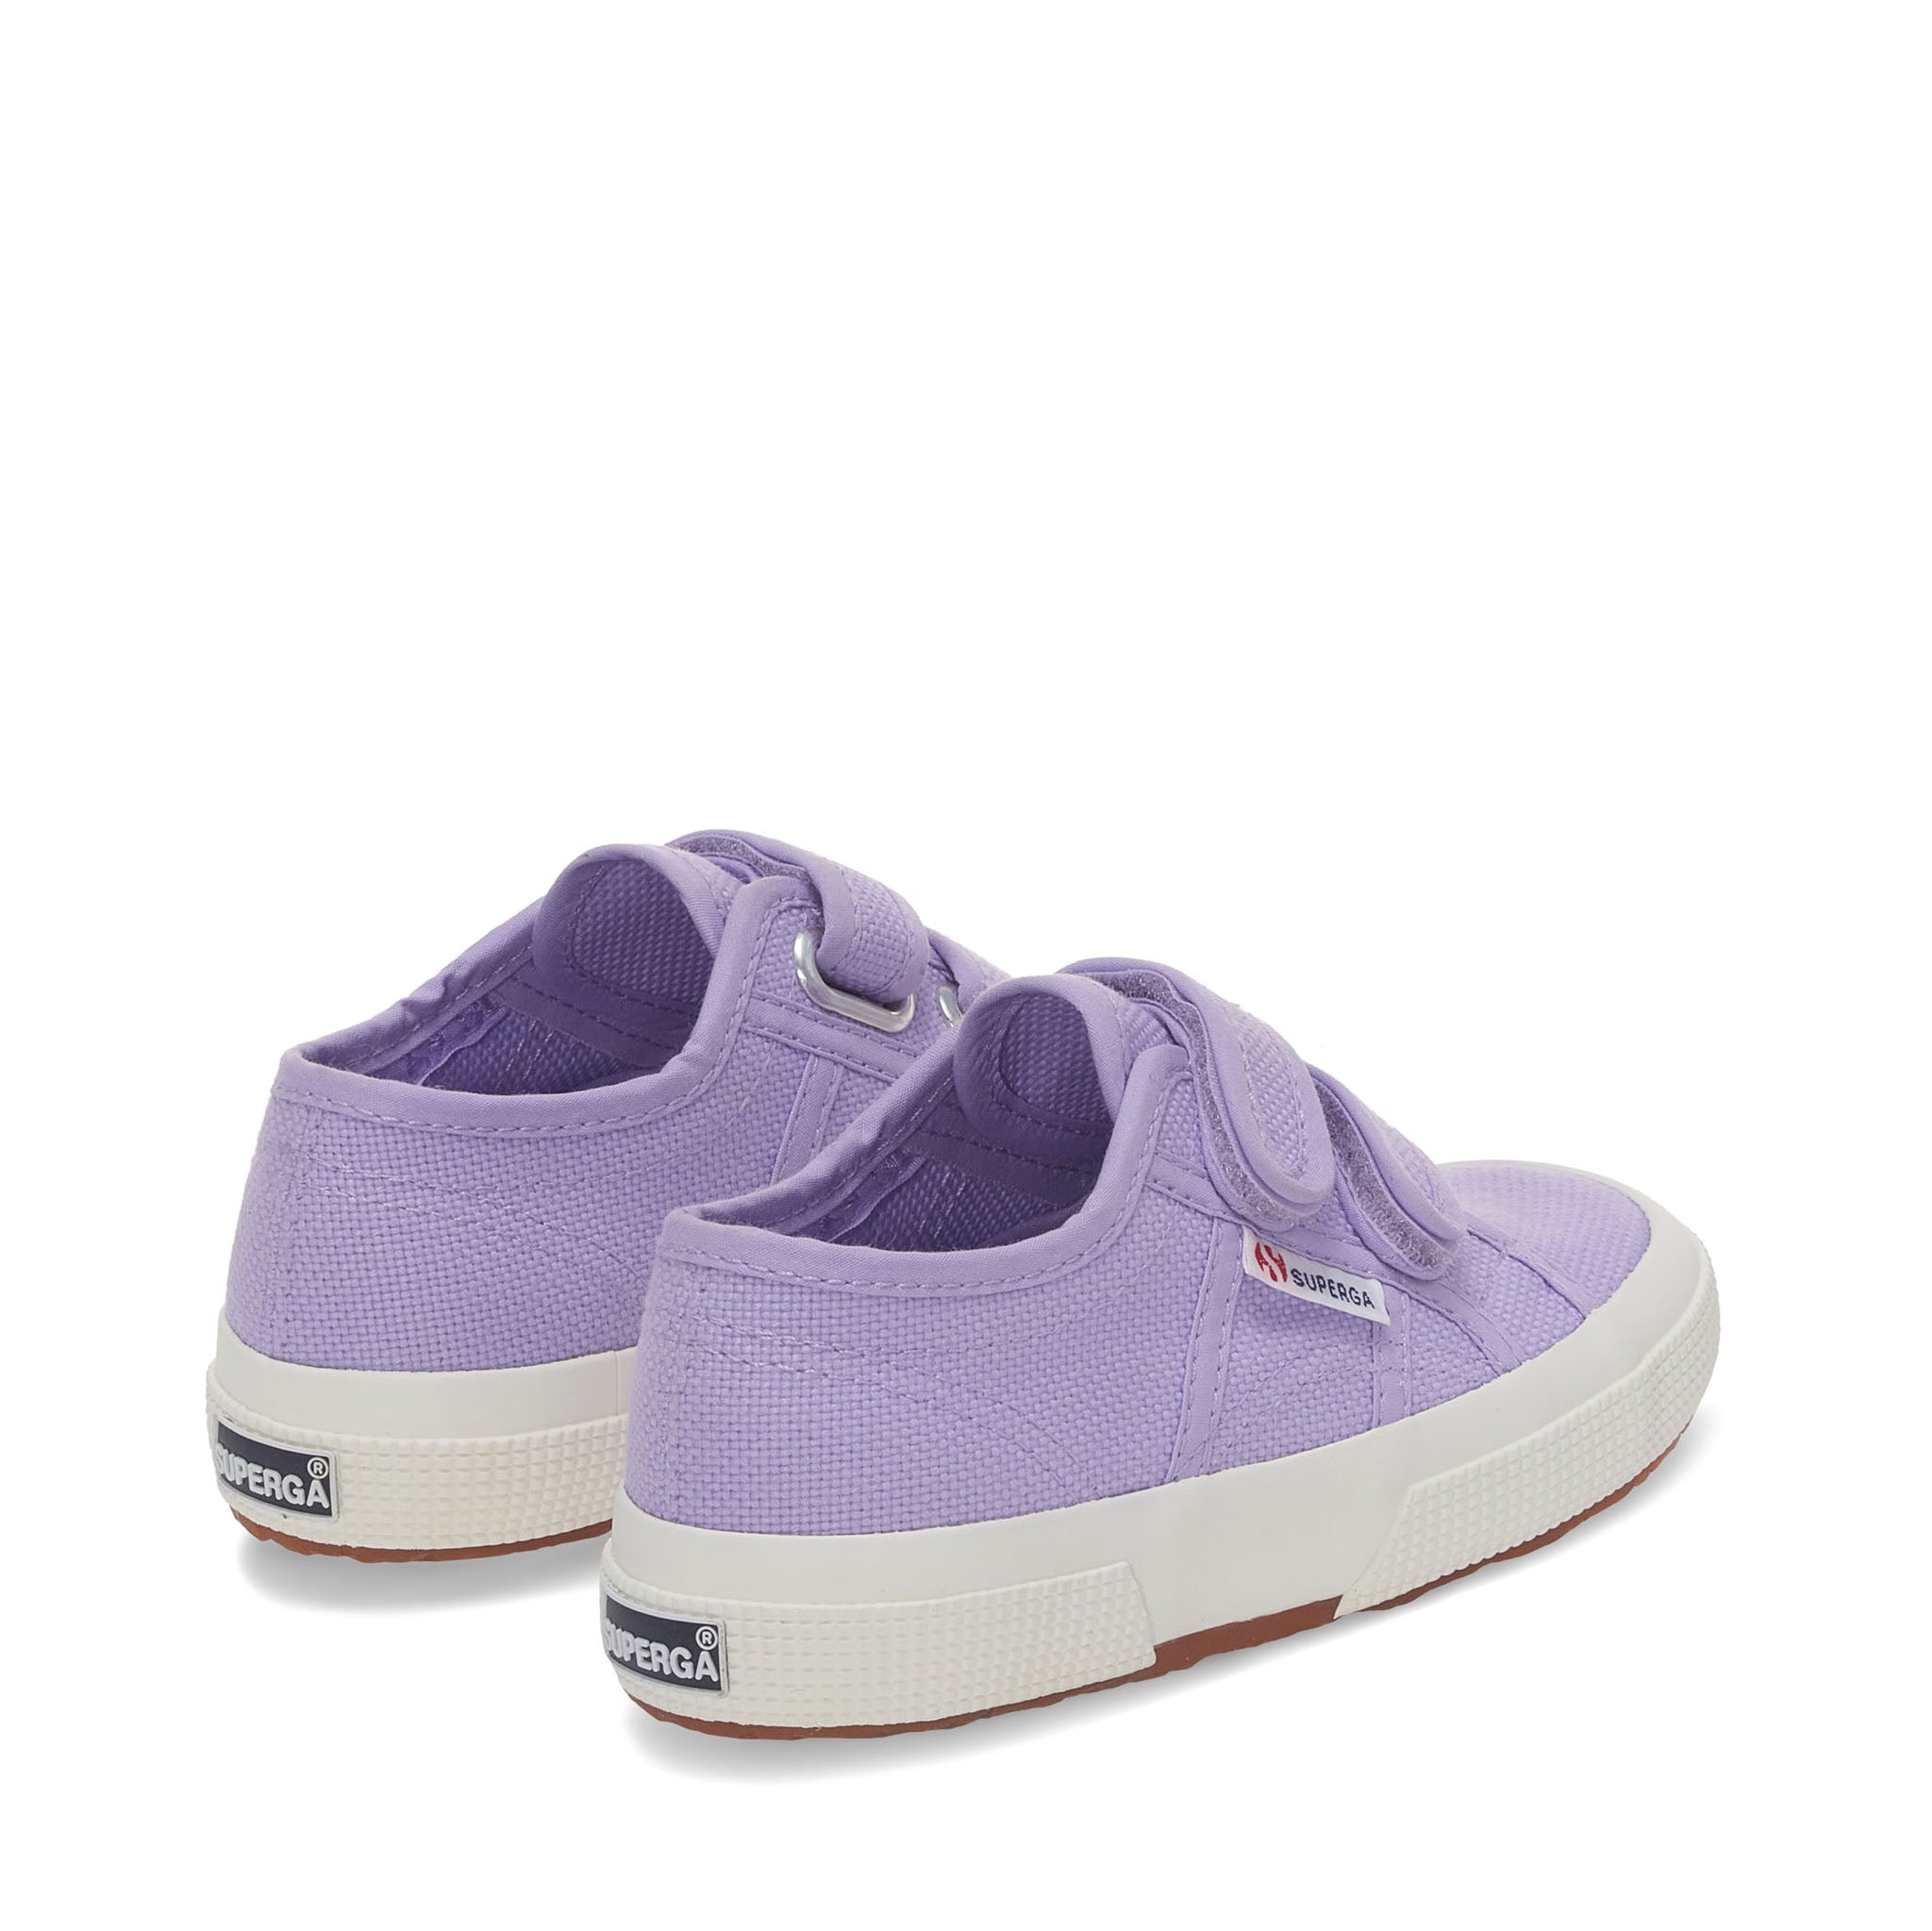 Superga 2750 Kids Cotjstrap Classic Sneakers - Violet Lilac. Back view.